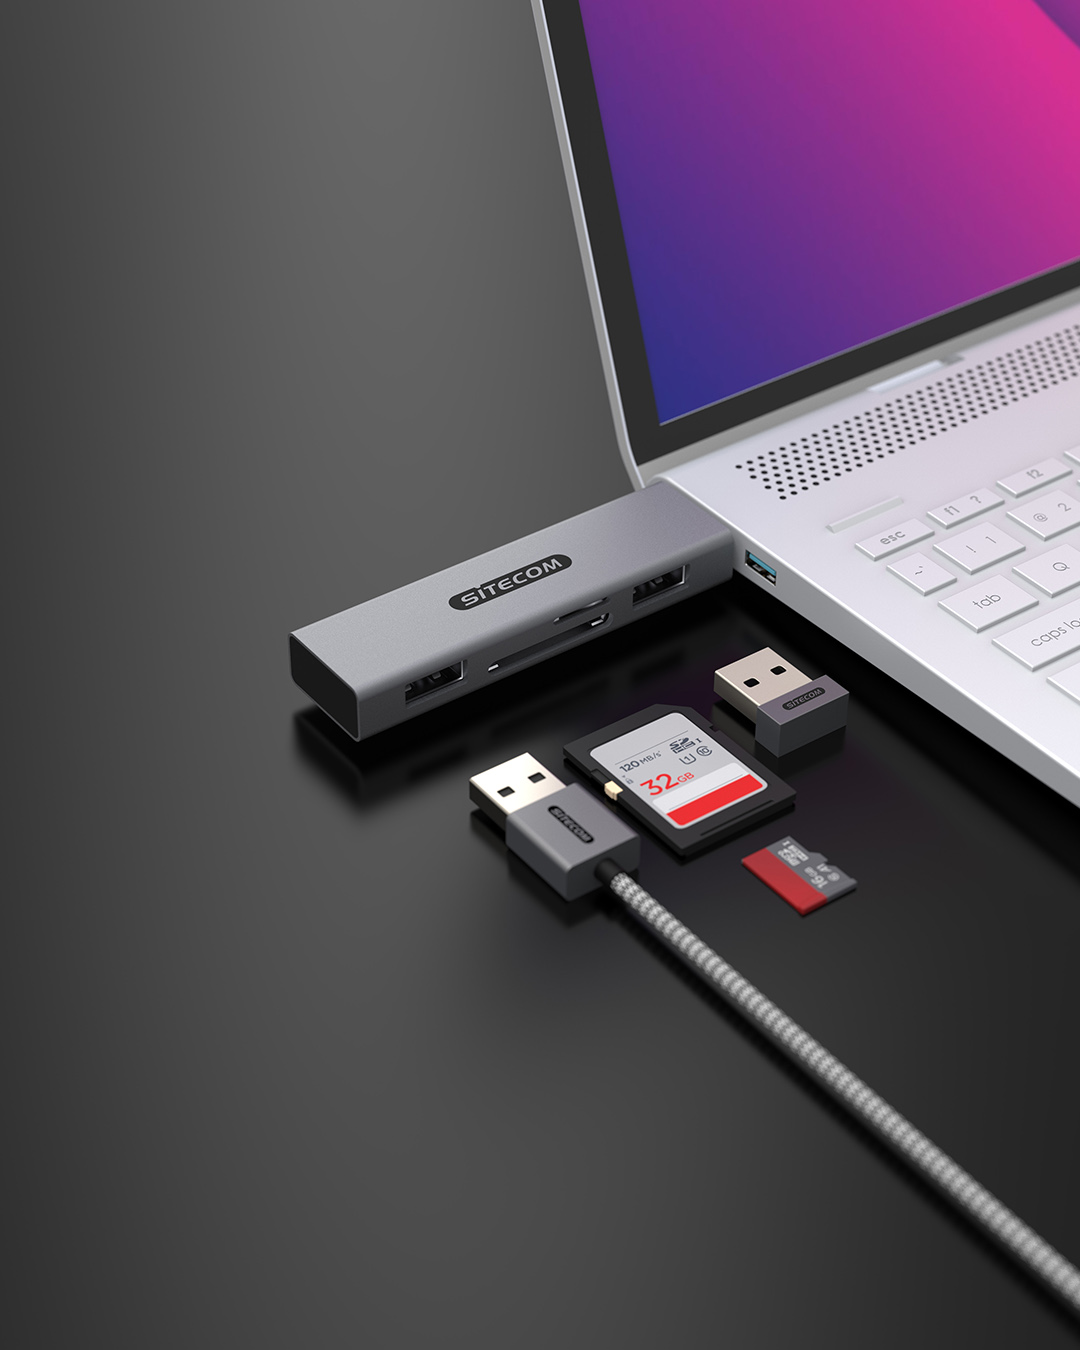 Sitecom -USB Stick Card Reader with 2 USB Ports - MD-1013